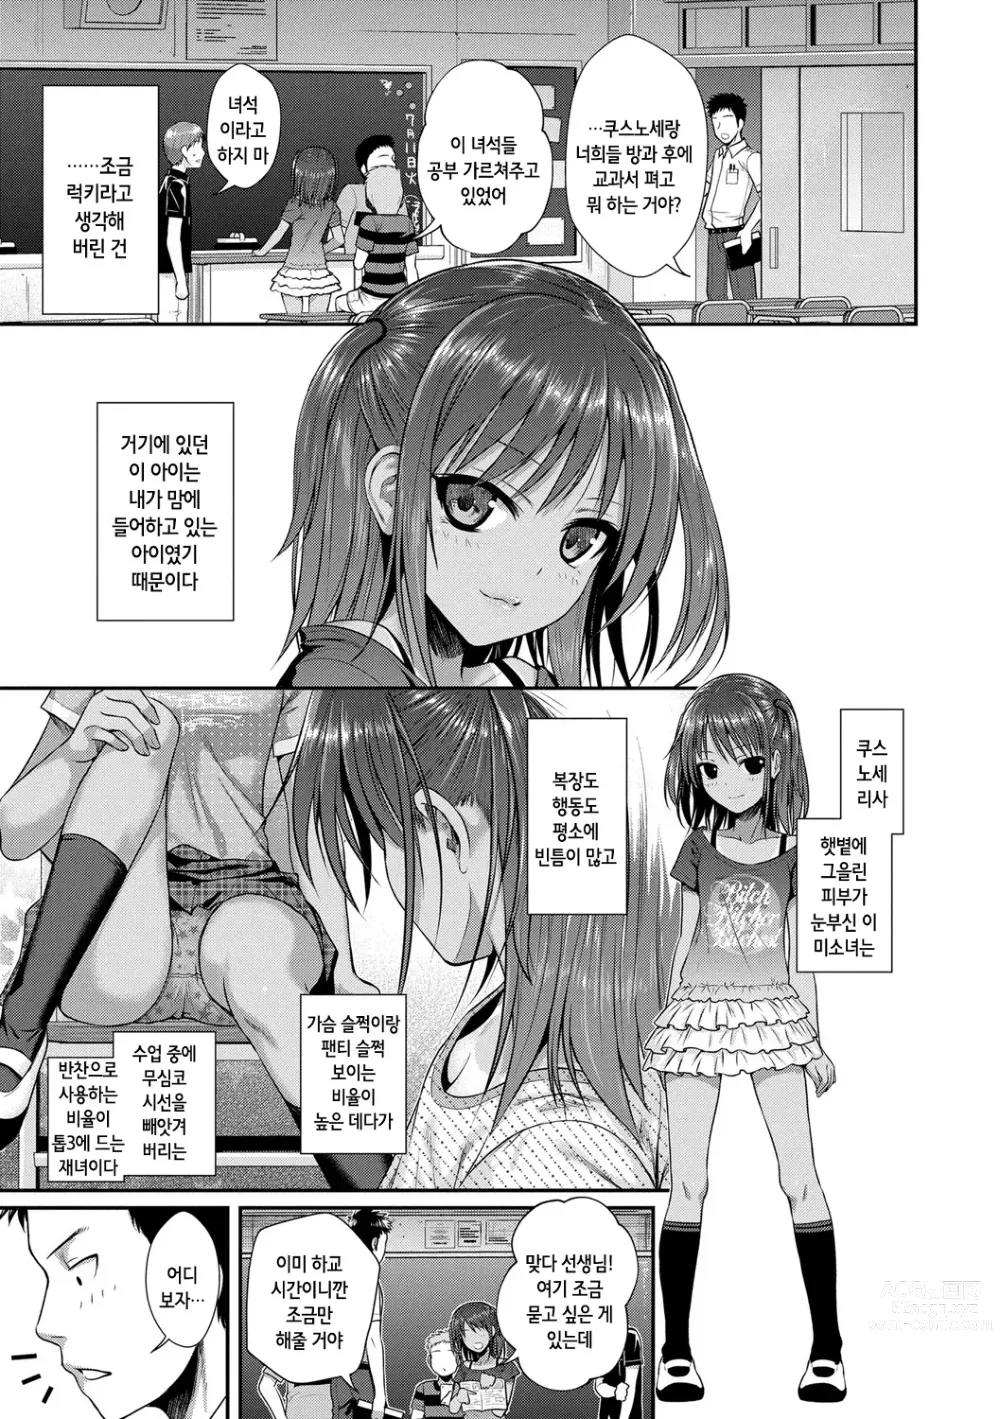 Page 9 of manga 프로토타입 로리타 + 토라노아나 구입 특전 4P 리플렛 휴일은 아저씨와 (decensored)